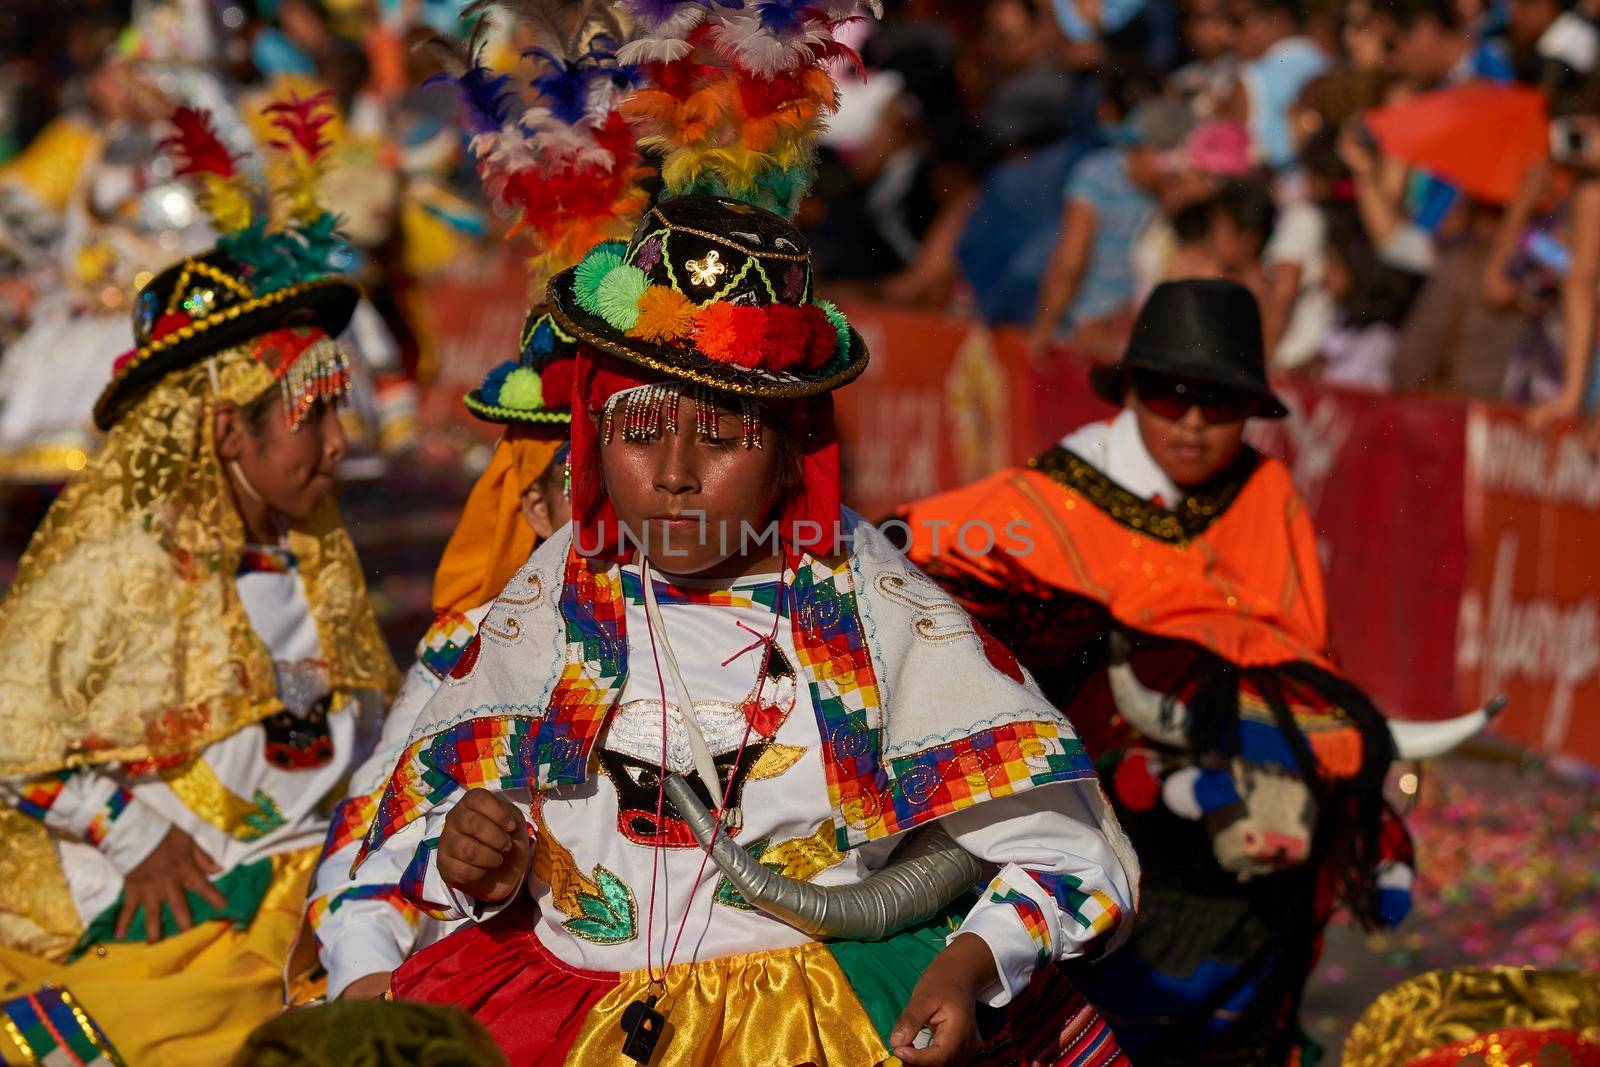 Waca Waca dancers at the Arica Carnival by JeremyRichards